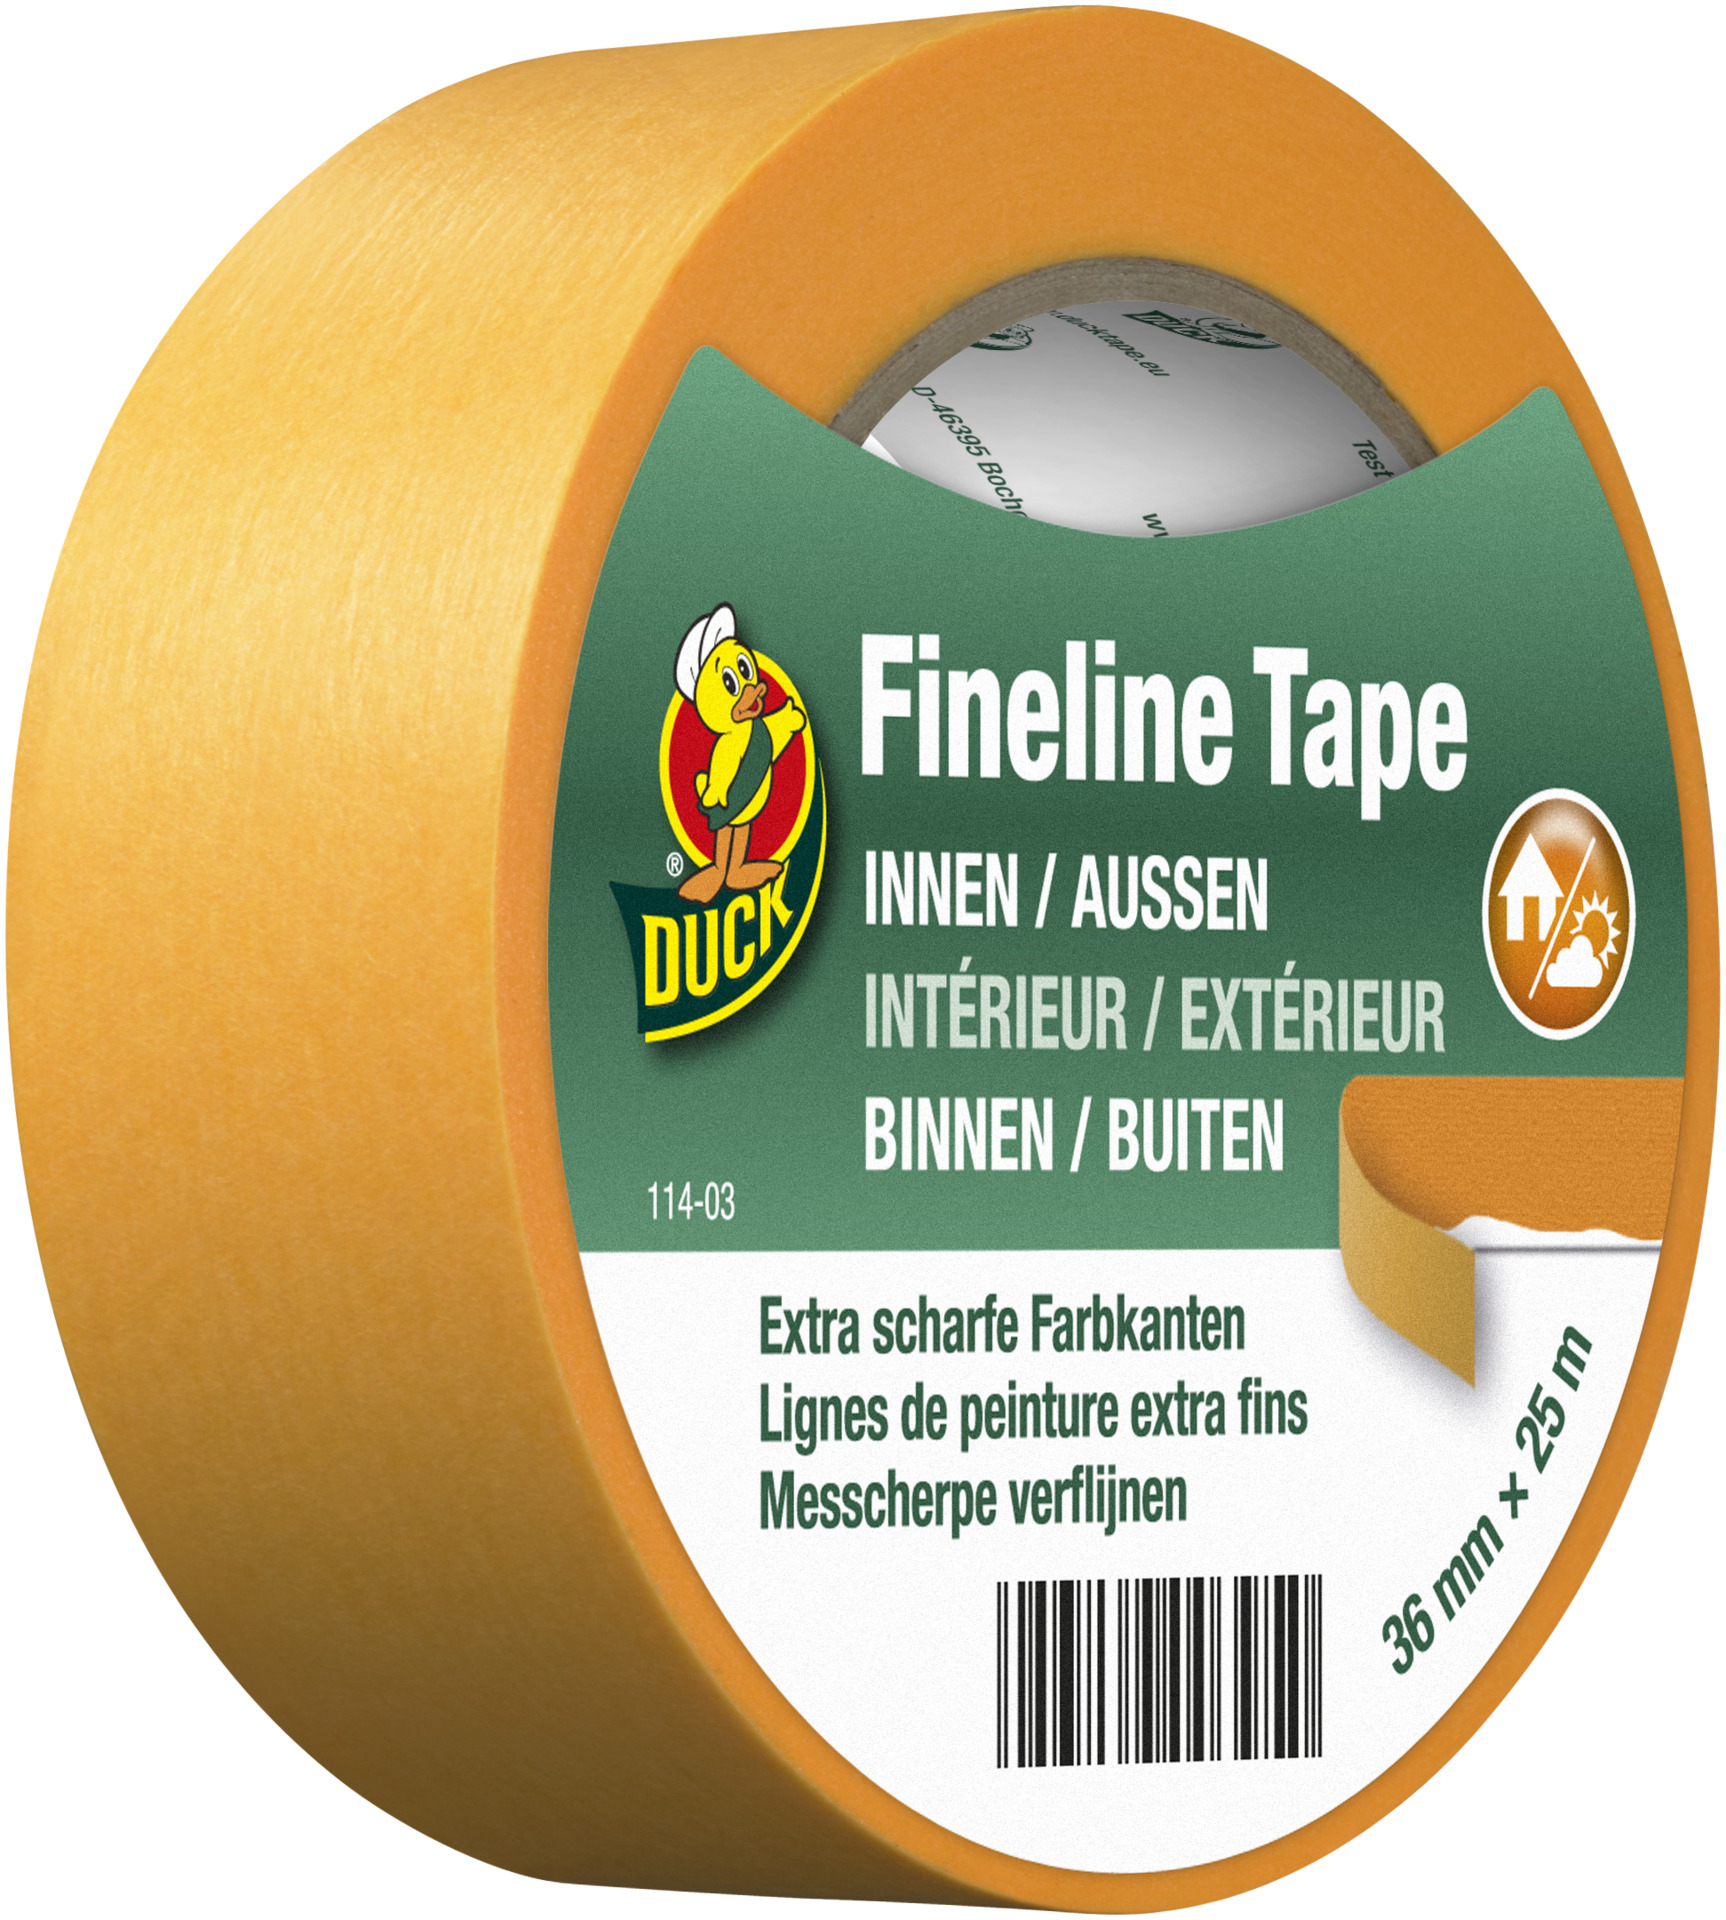 Fineline Tape